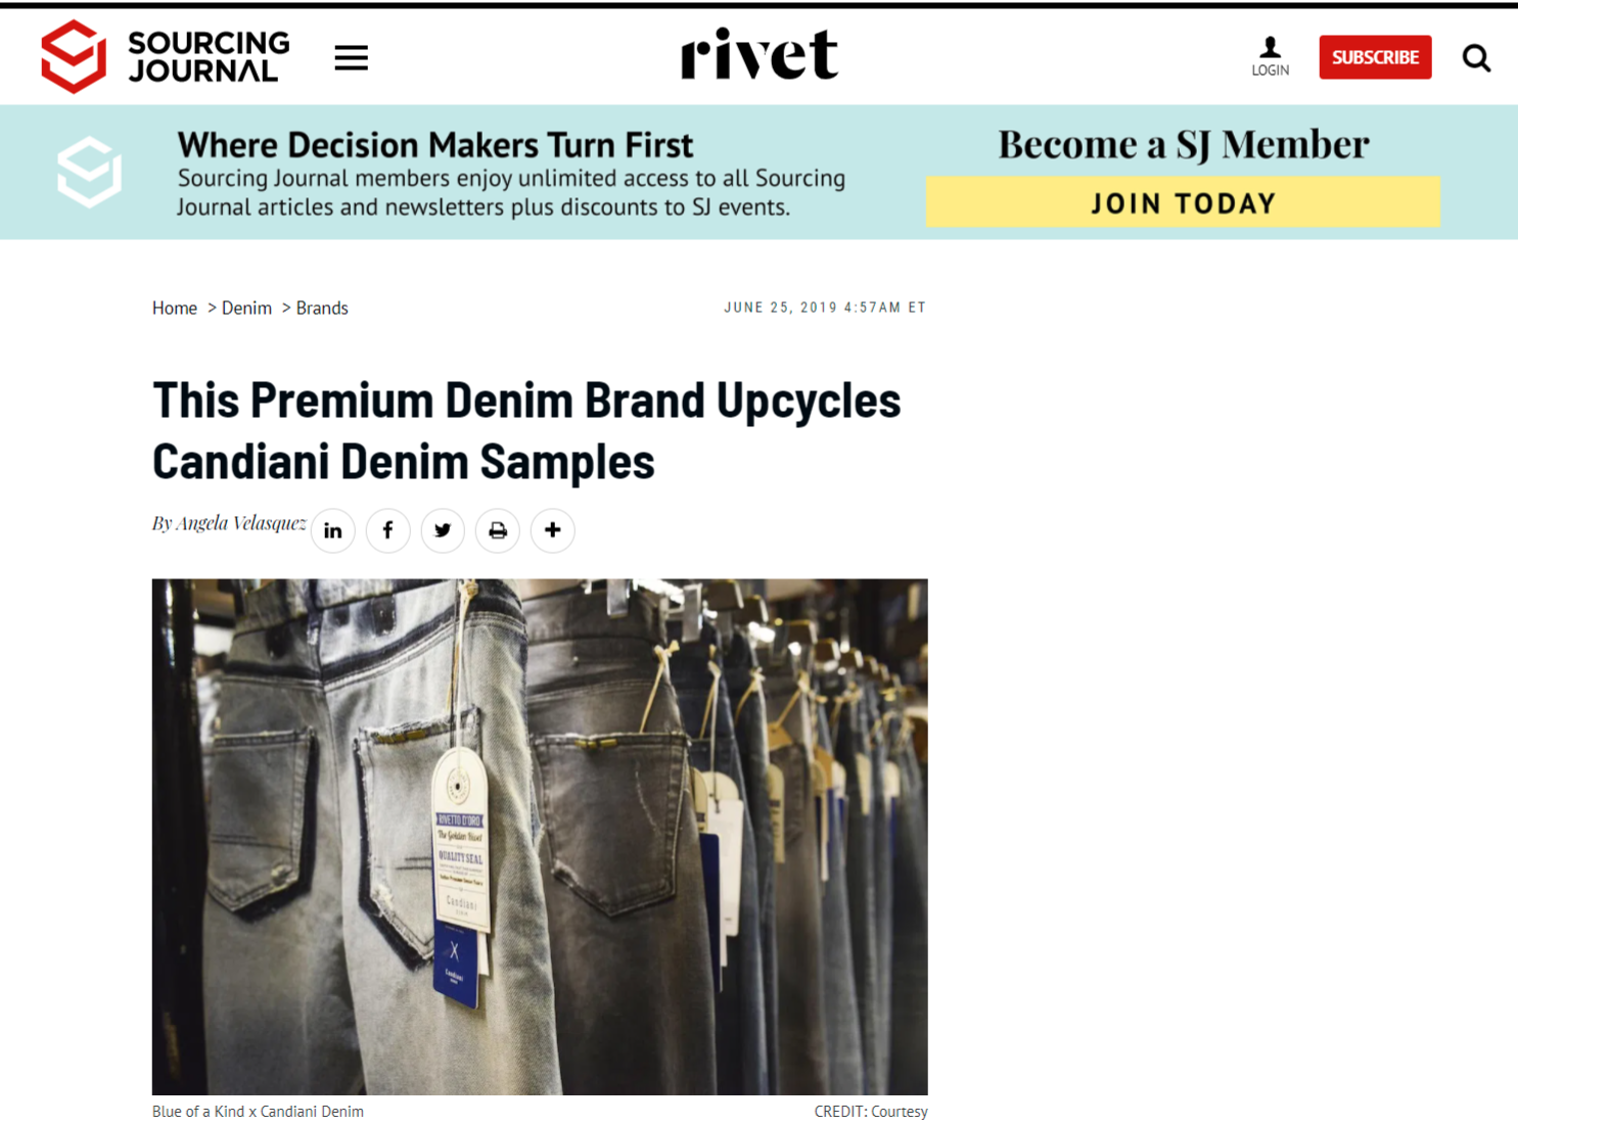 Sourcingjournal.com Rivet - This Premium Denim Brand Upcycles Candiani Denim Samples